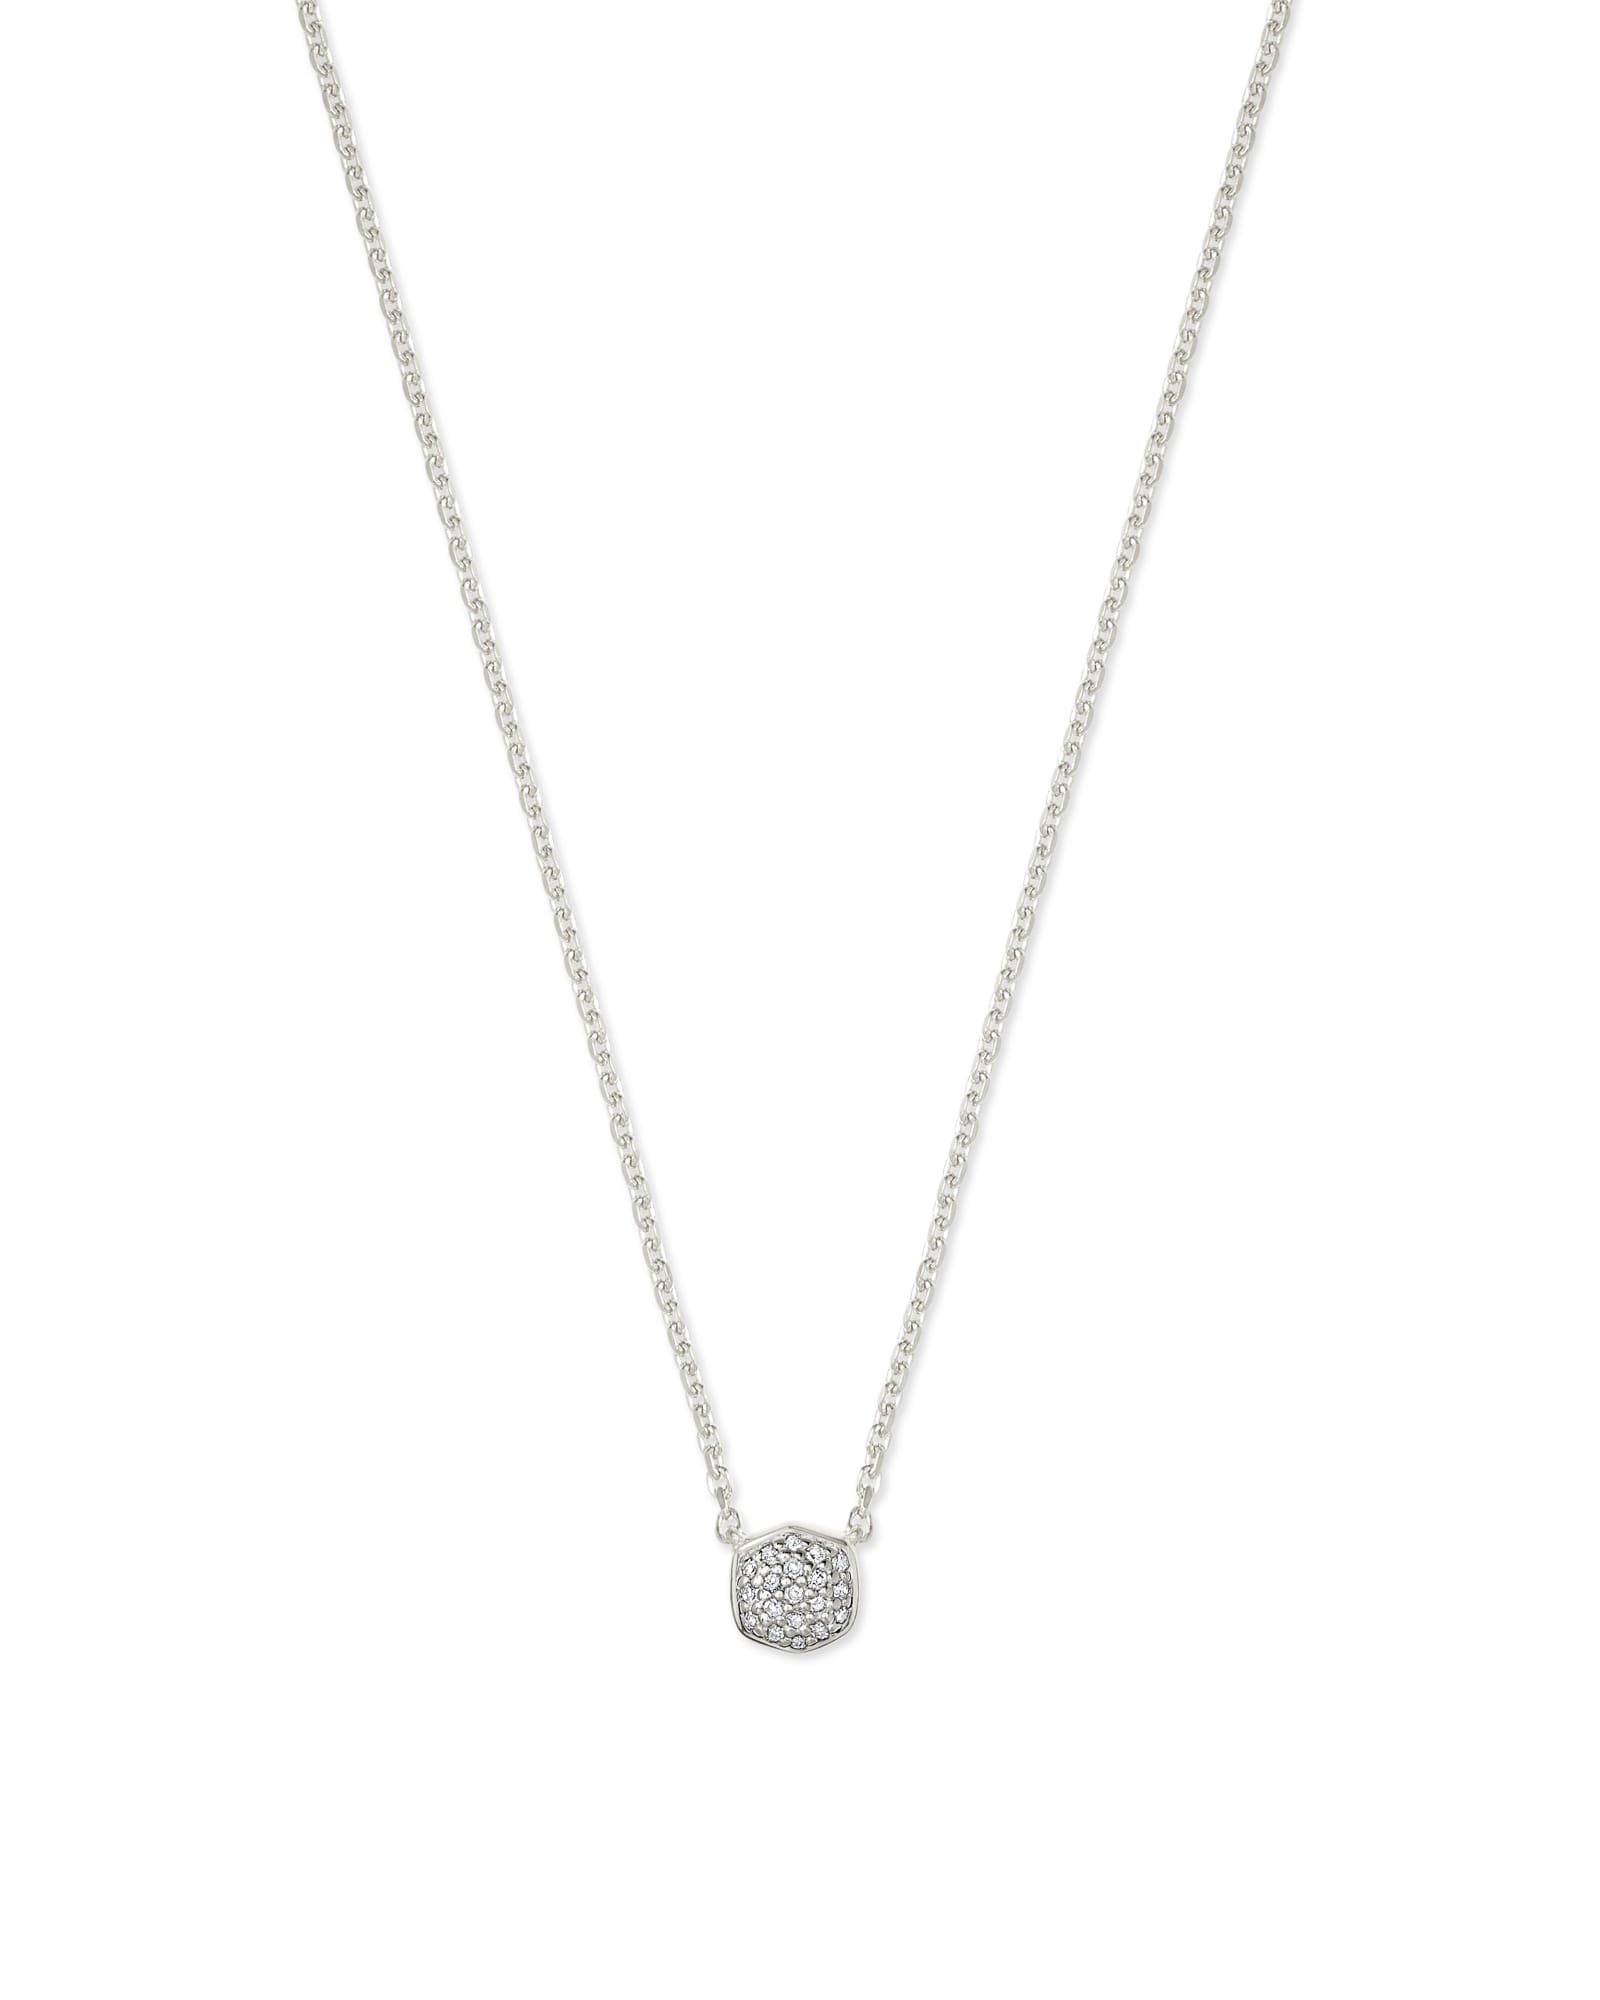 Davie Sterling Silver Pave Pendant Necklace in White Diamond